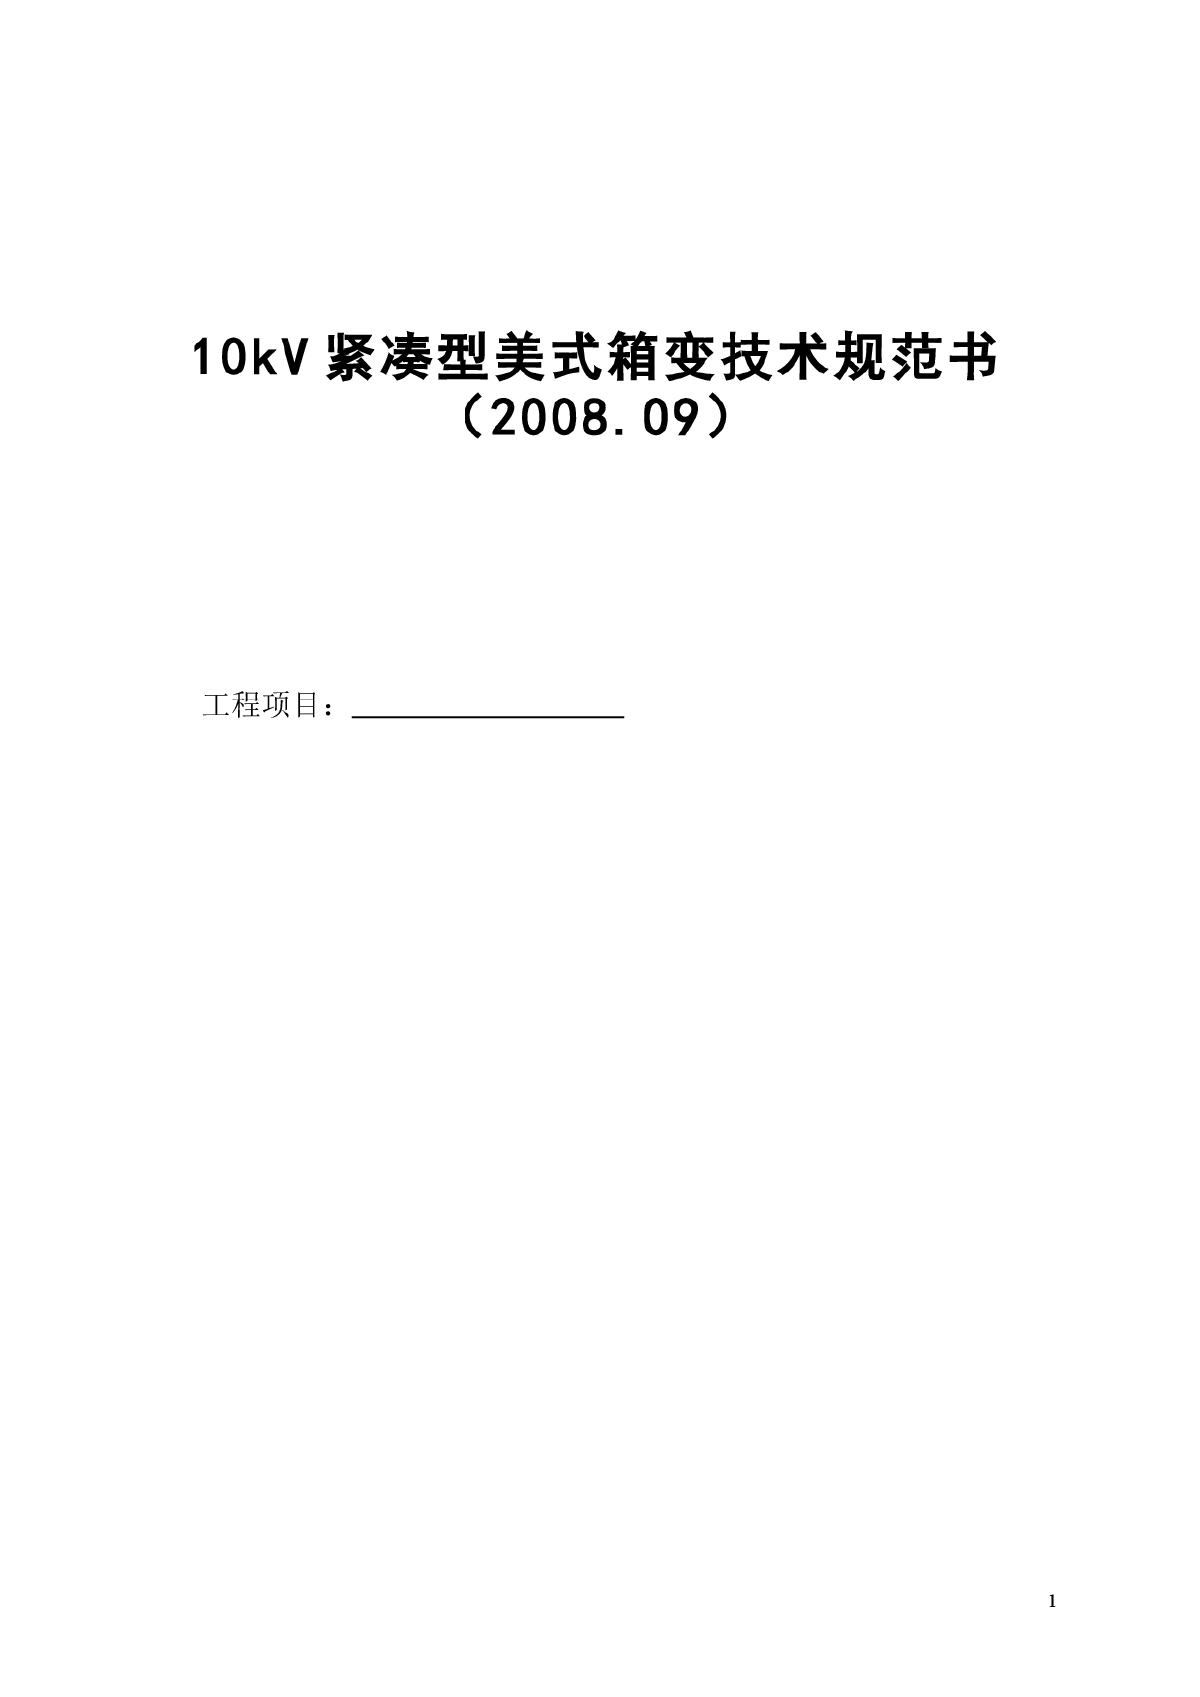 10kV预装式变电站(美式箱变)技术规范书